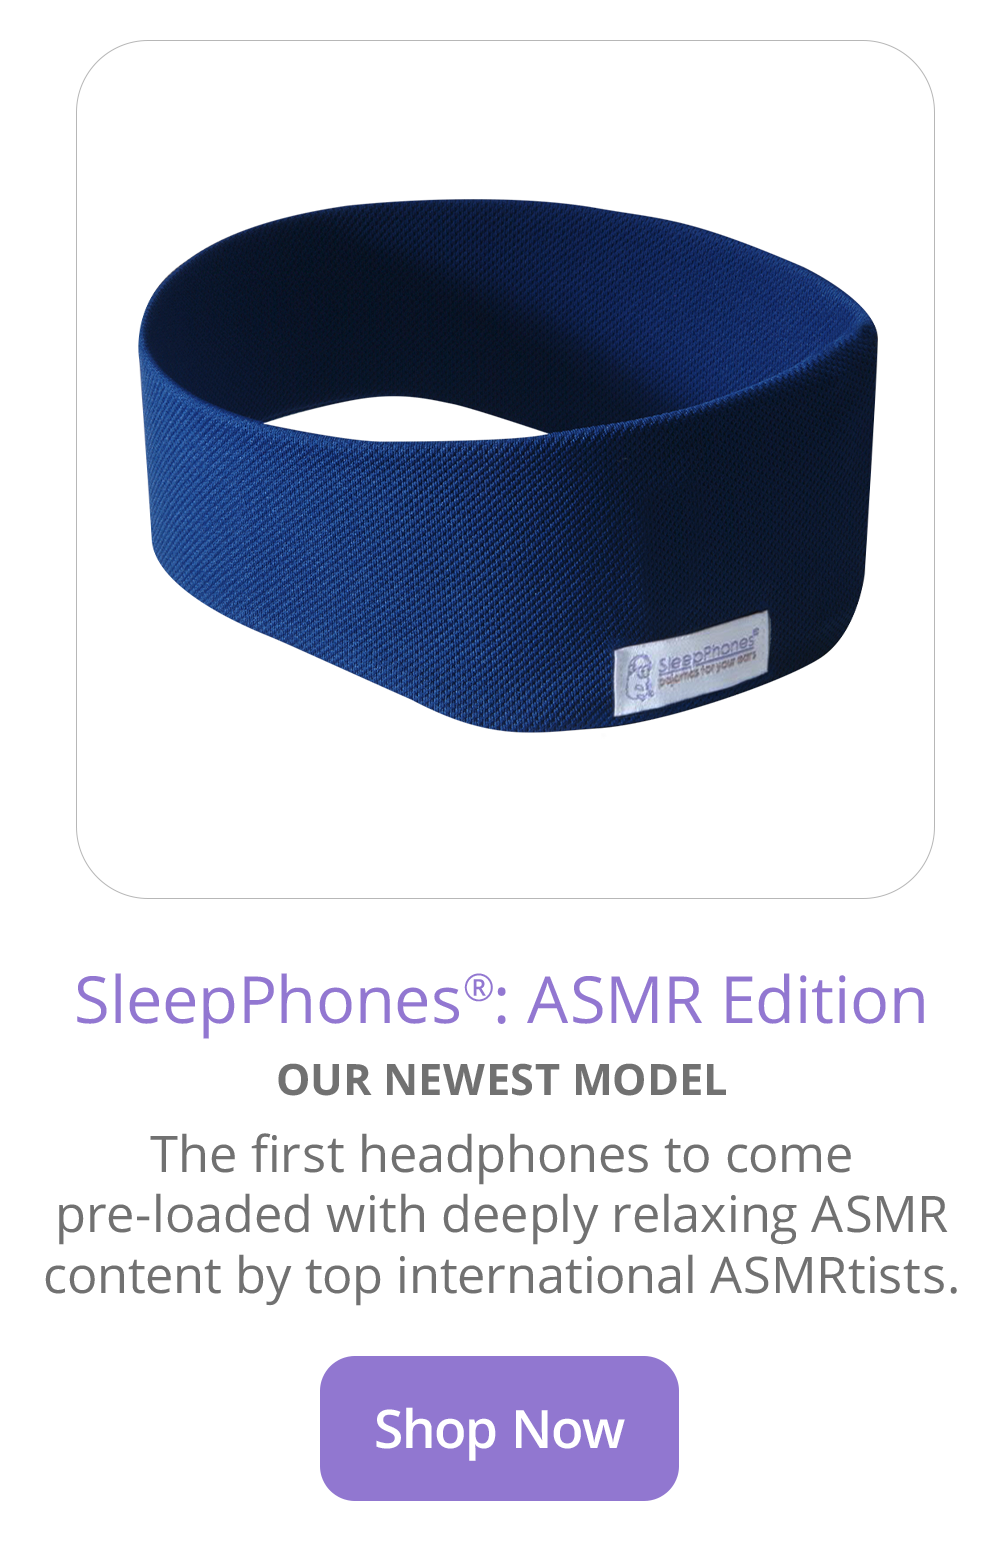 SleepPhones®: ASMR Edition Sleep Headphones With 8 Hours of Self Contained ASMR